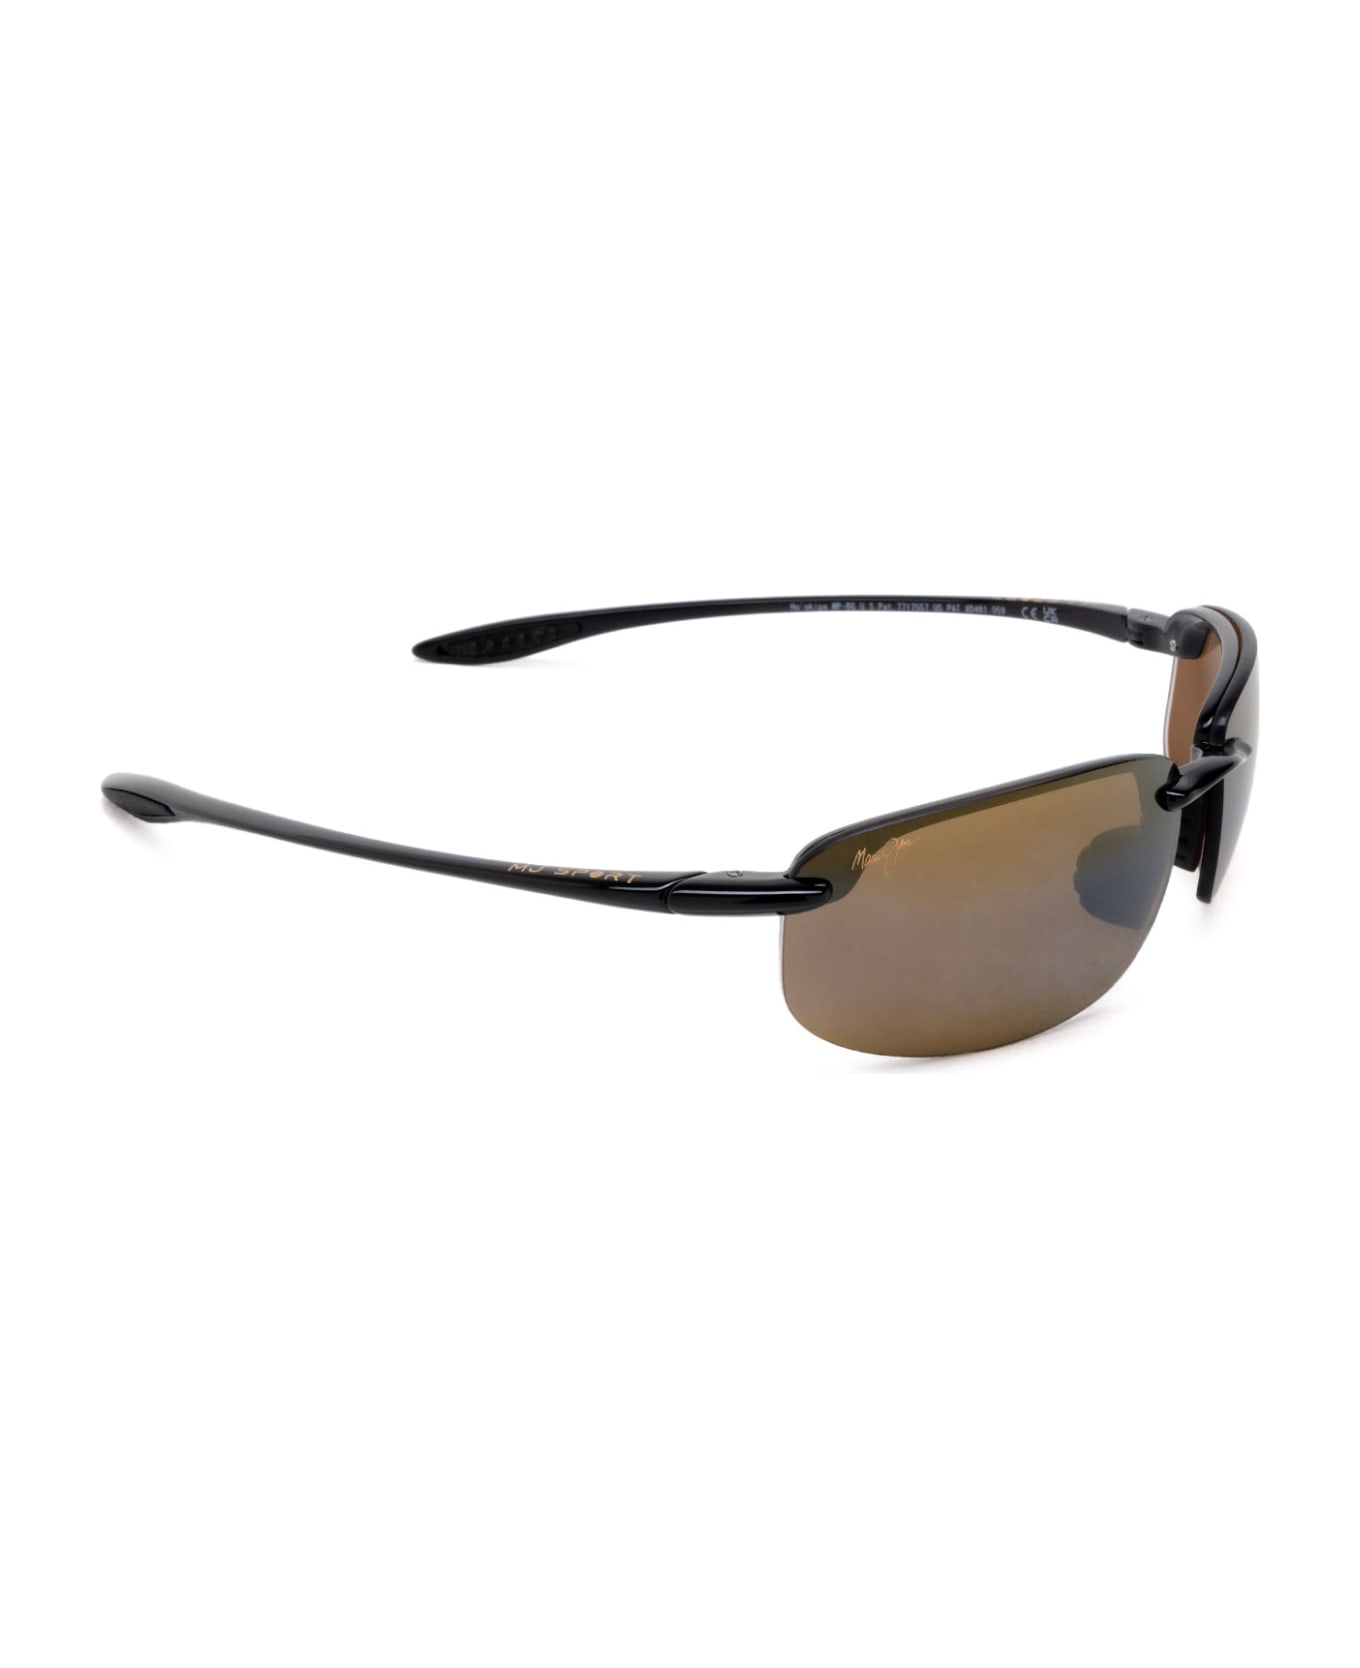 Maui Jim Mj407 Gloss Black Sunglasses - Gloss Black